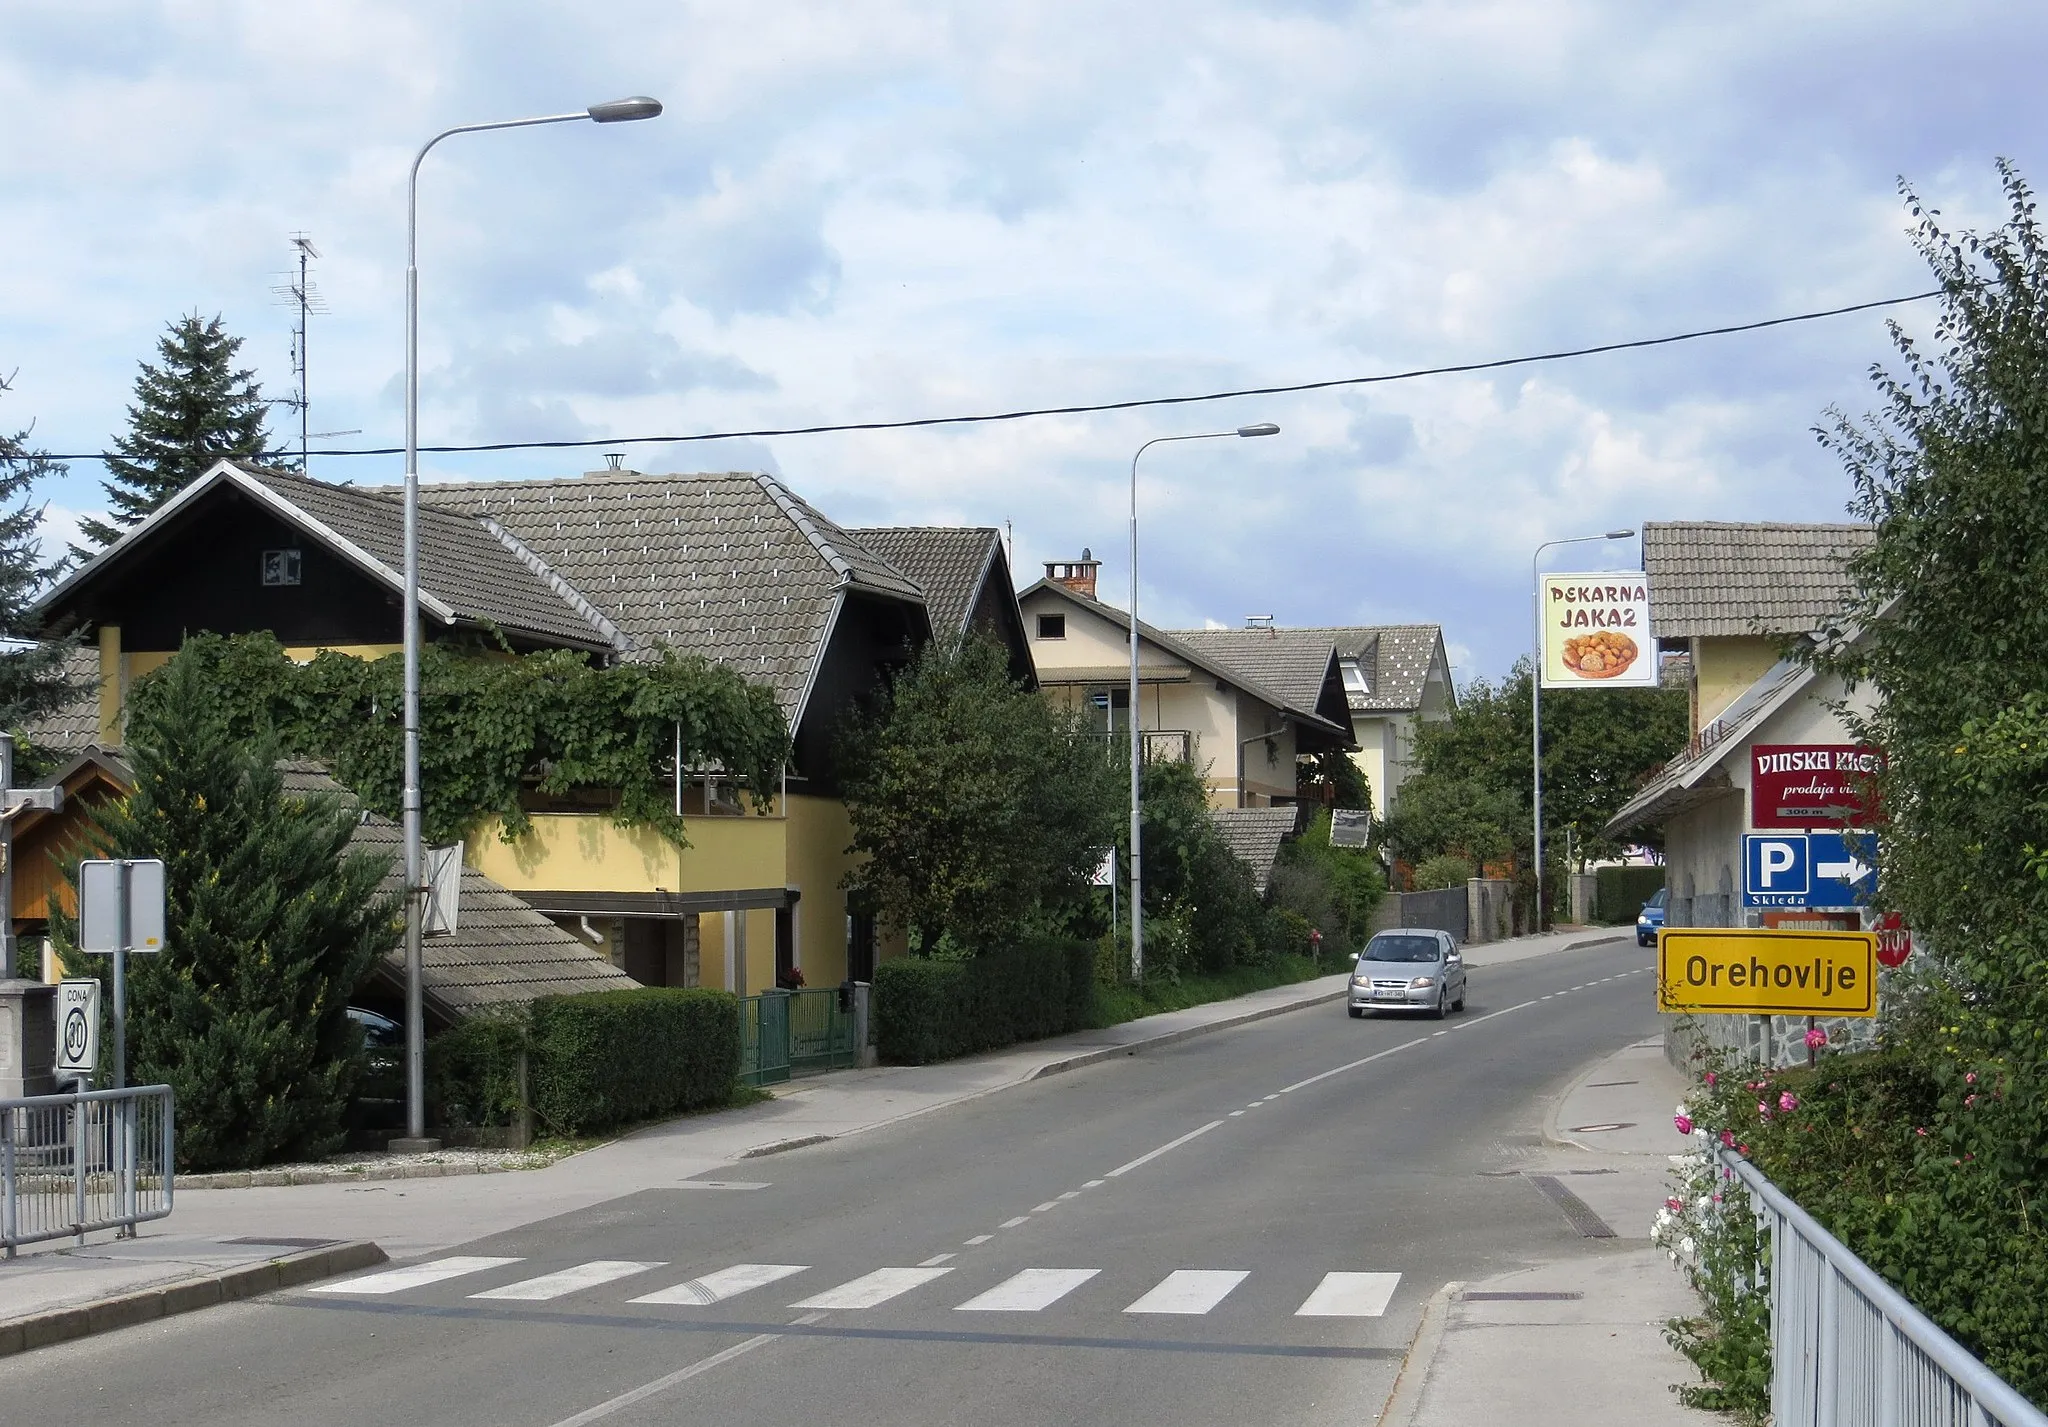 Photo showing: Orehovlje, Municipality of Kranj, Slovenia